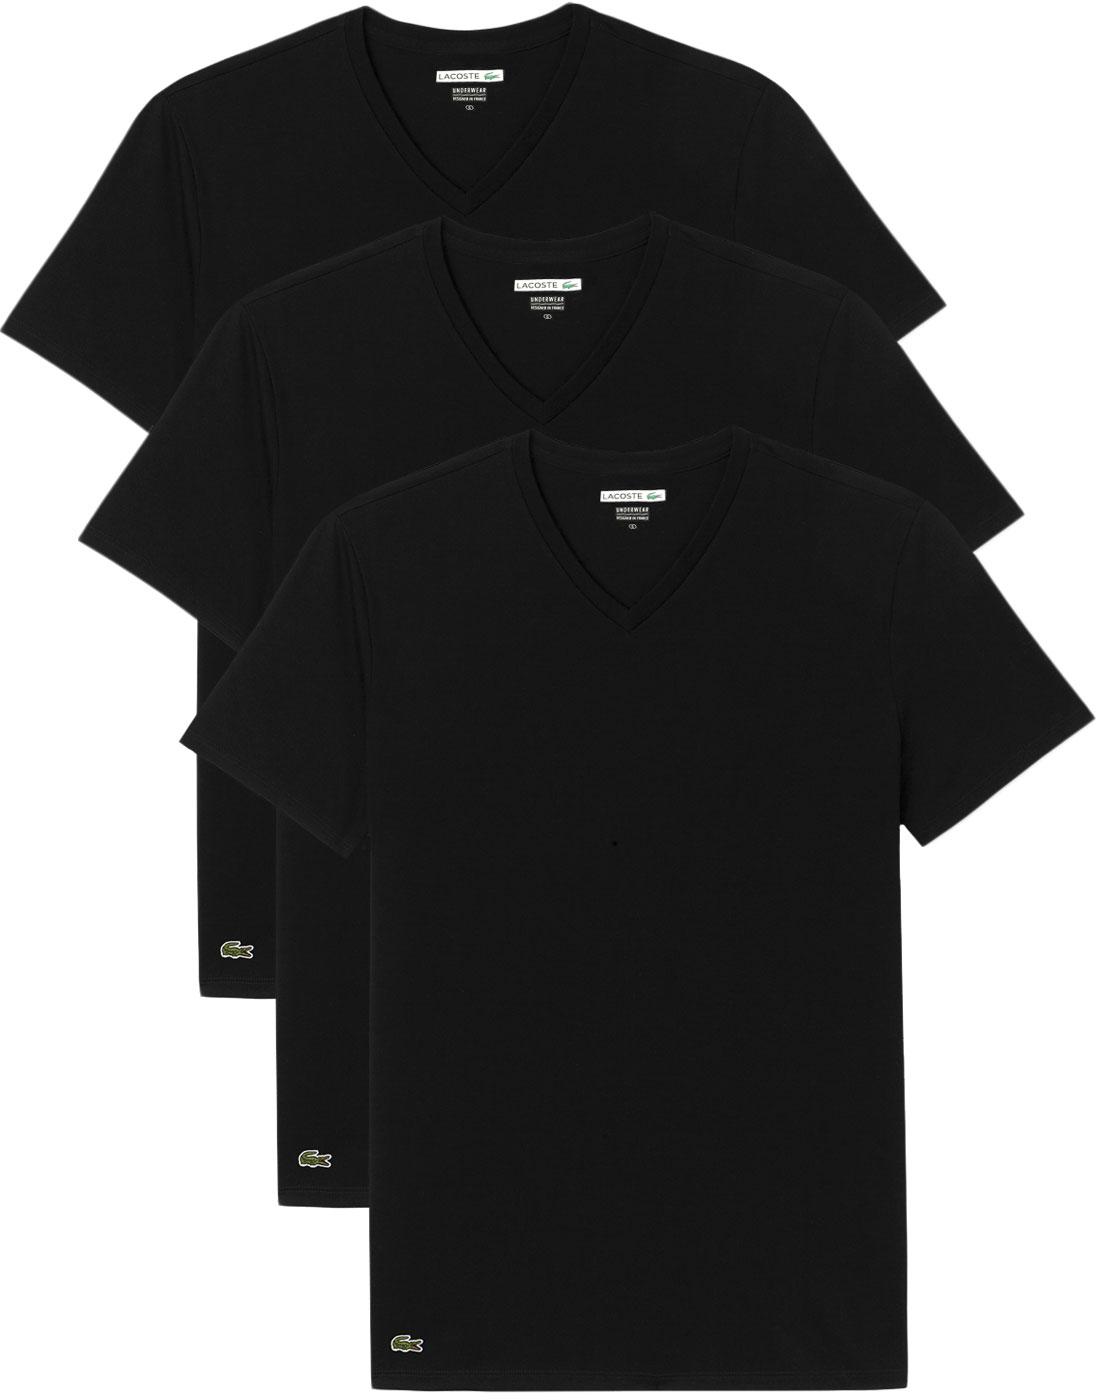 LACOSTE Men's 3 Pack Boxed V-Neck T-Shirt - BLACK